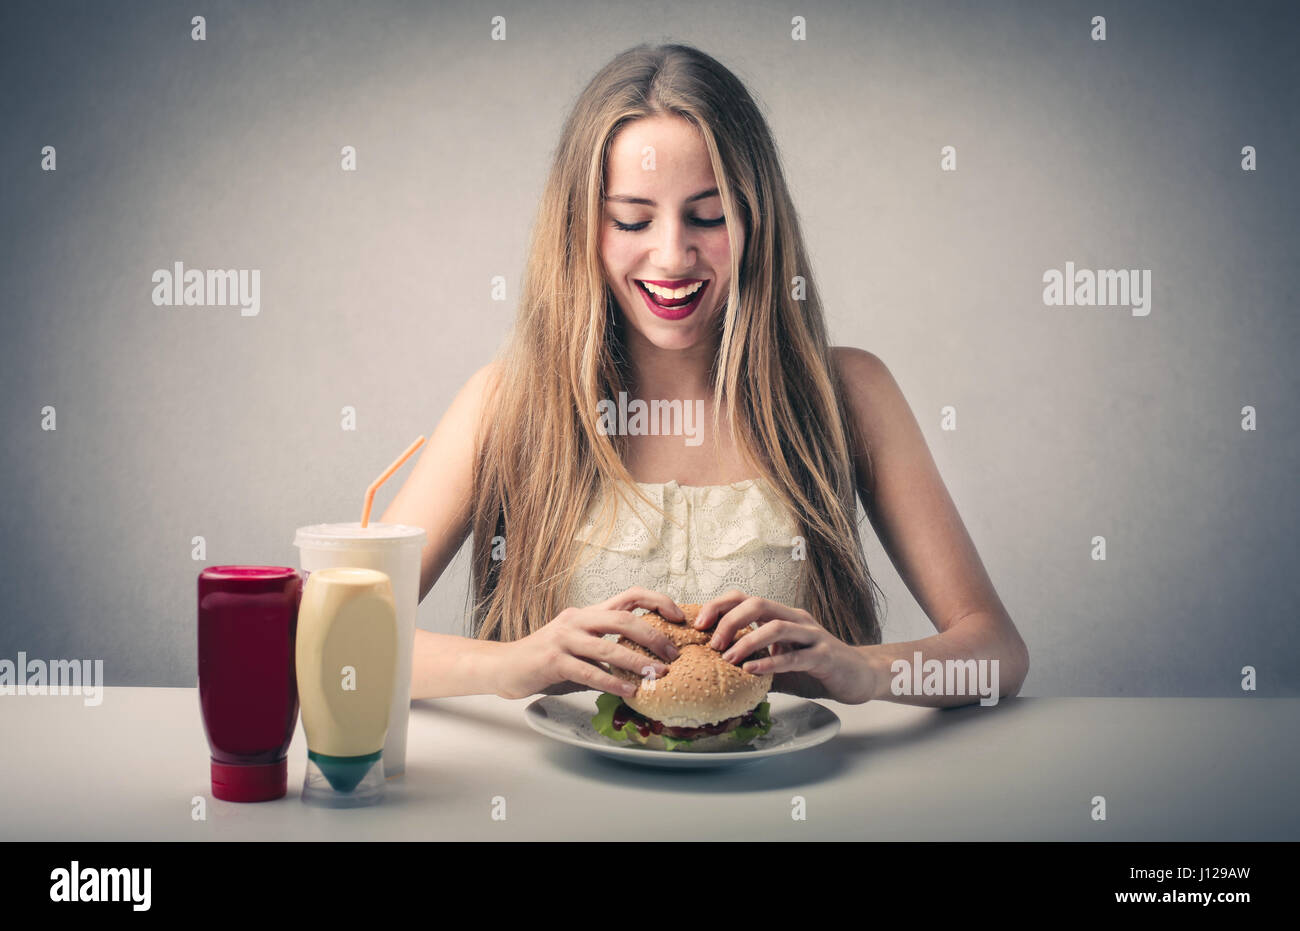 Young blond woman eating hamburger Stock Photo